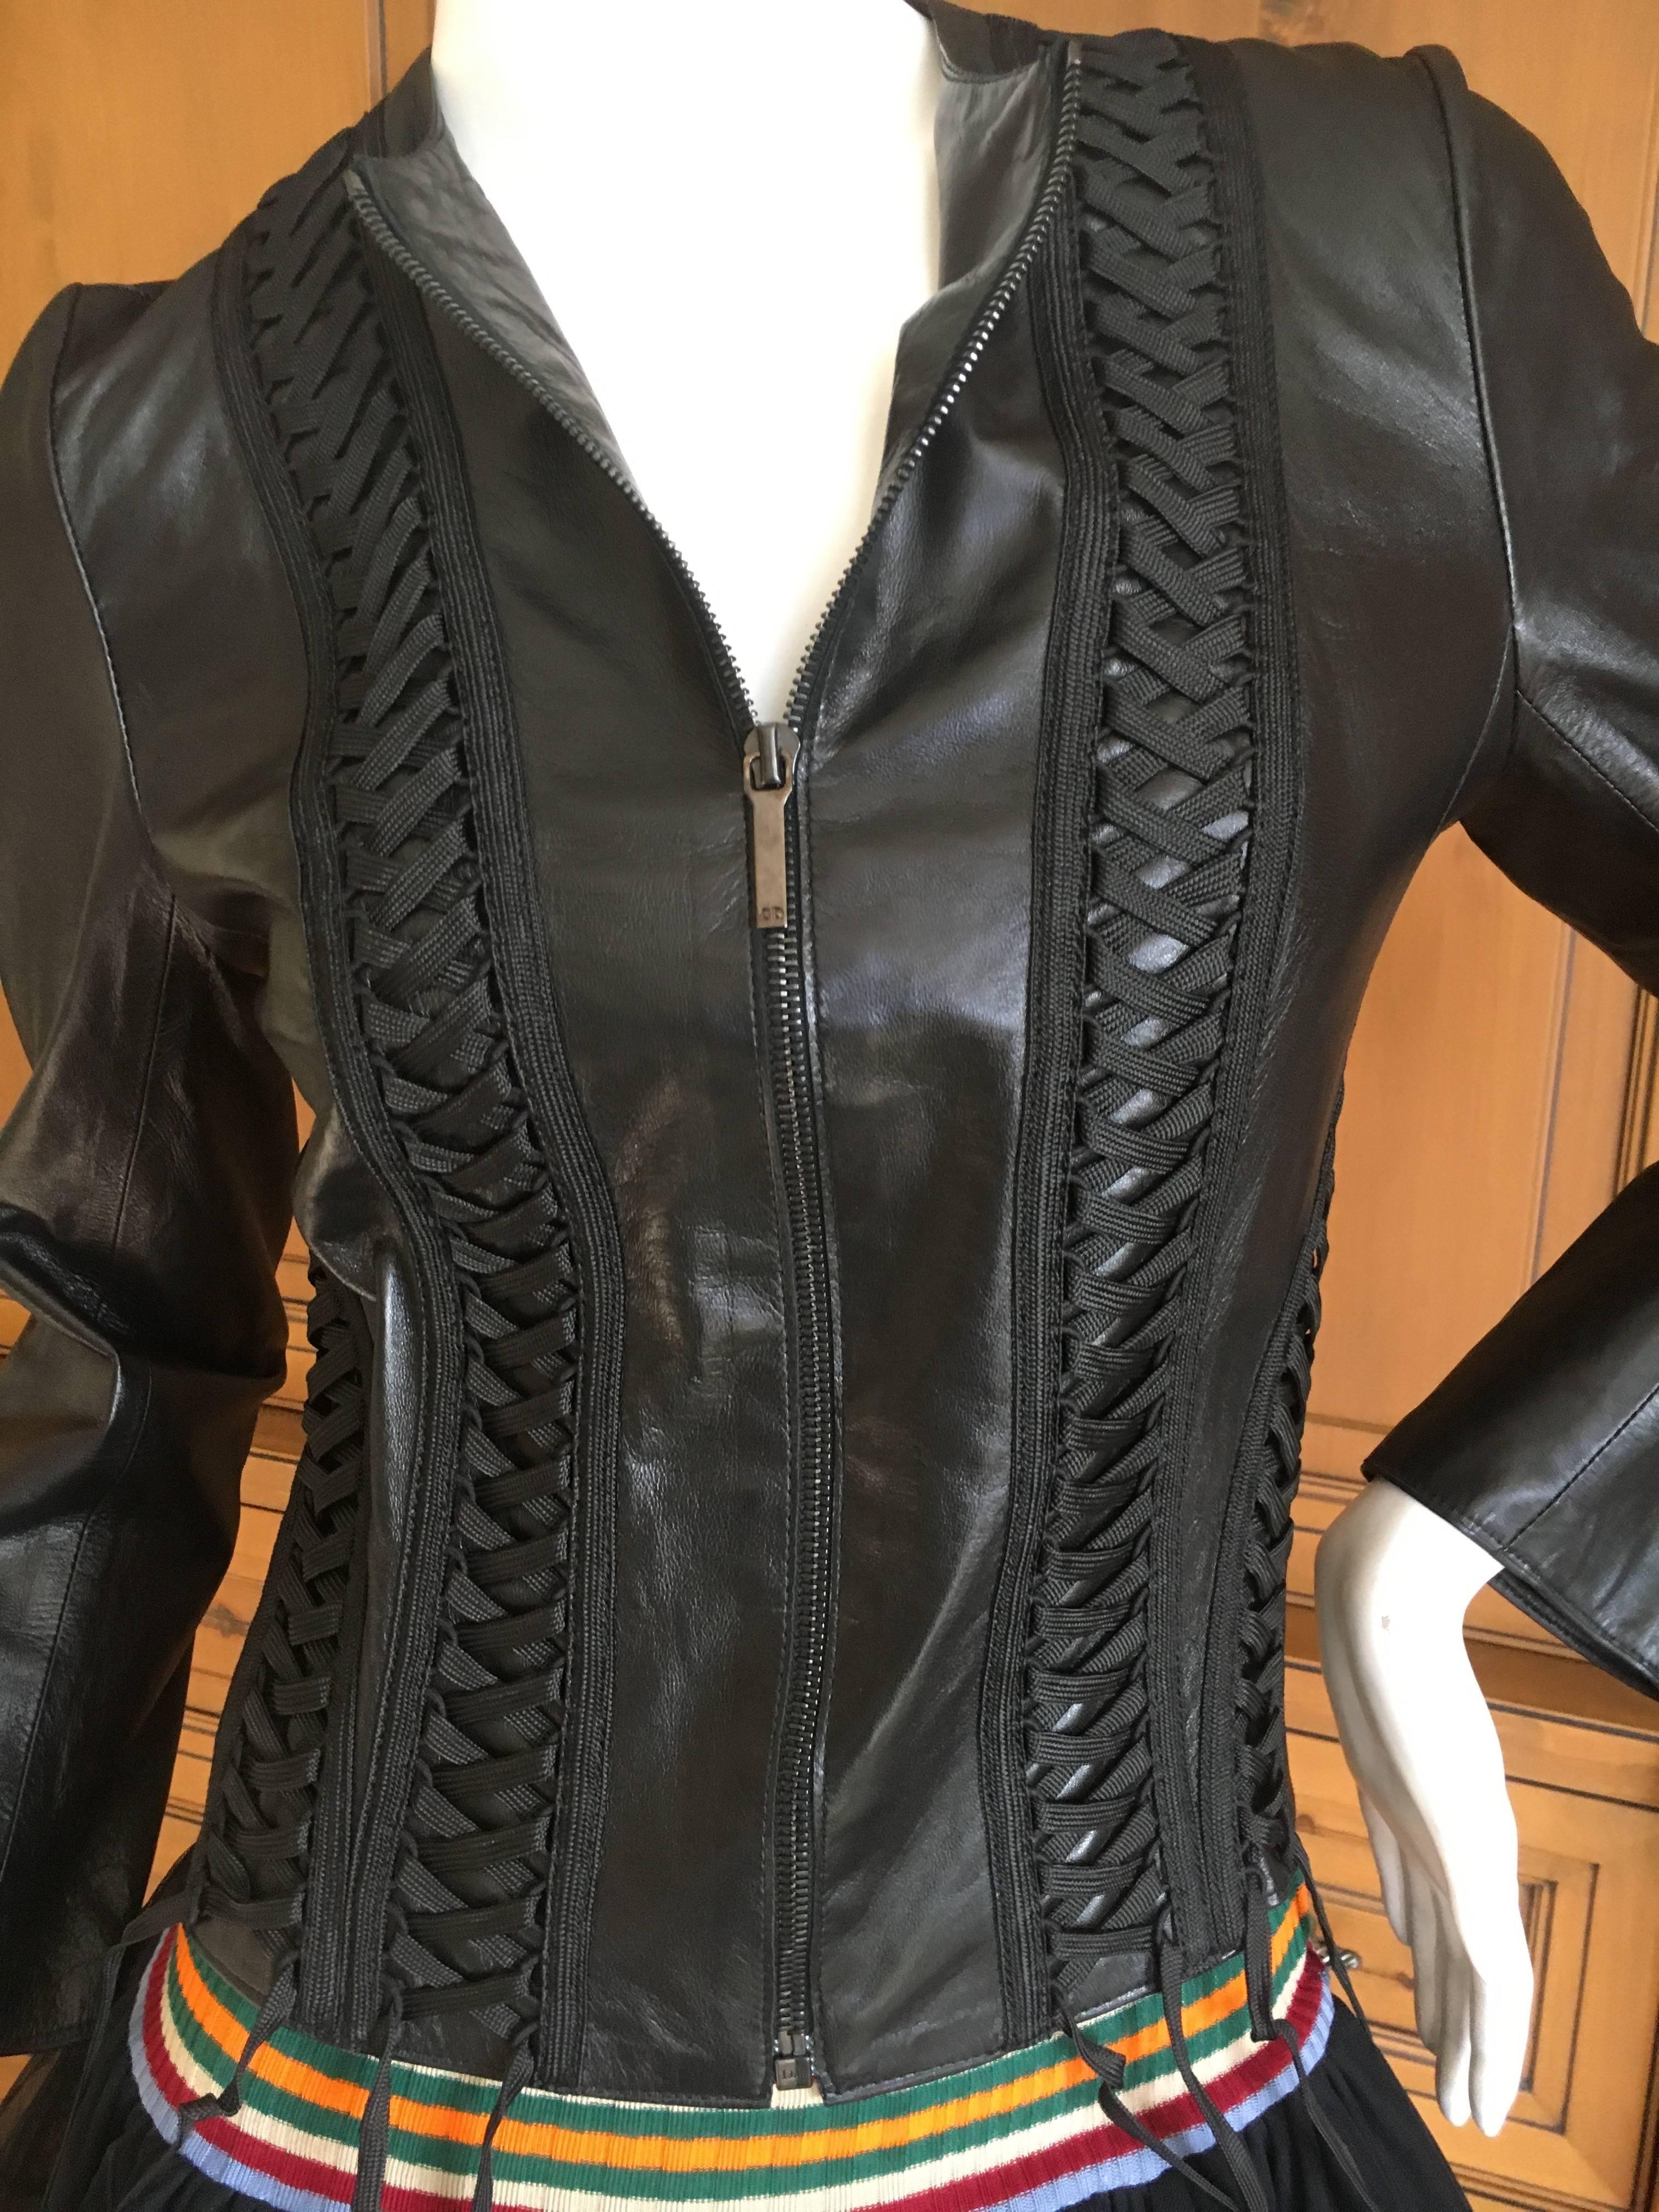 Christian Dior Black Lambskin Leather Corset Laced Moto Jacket by John Galliano 2